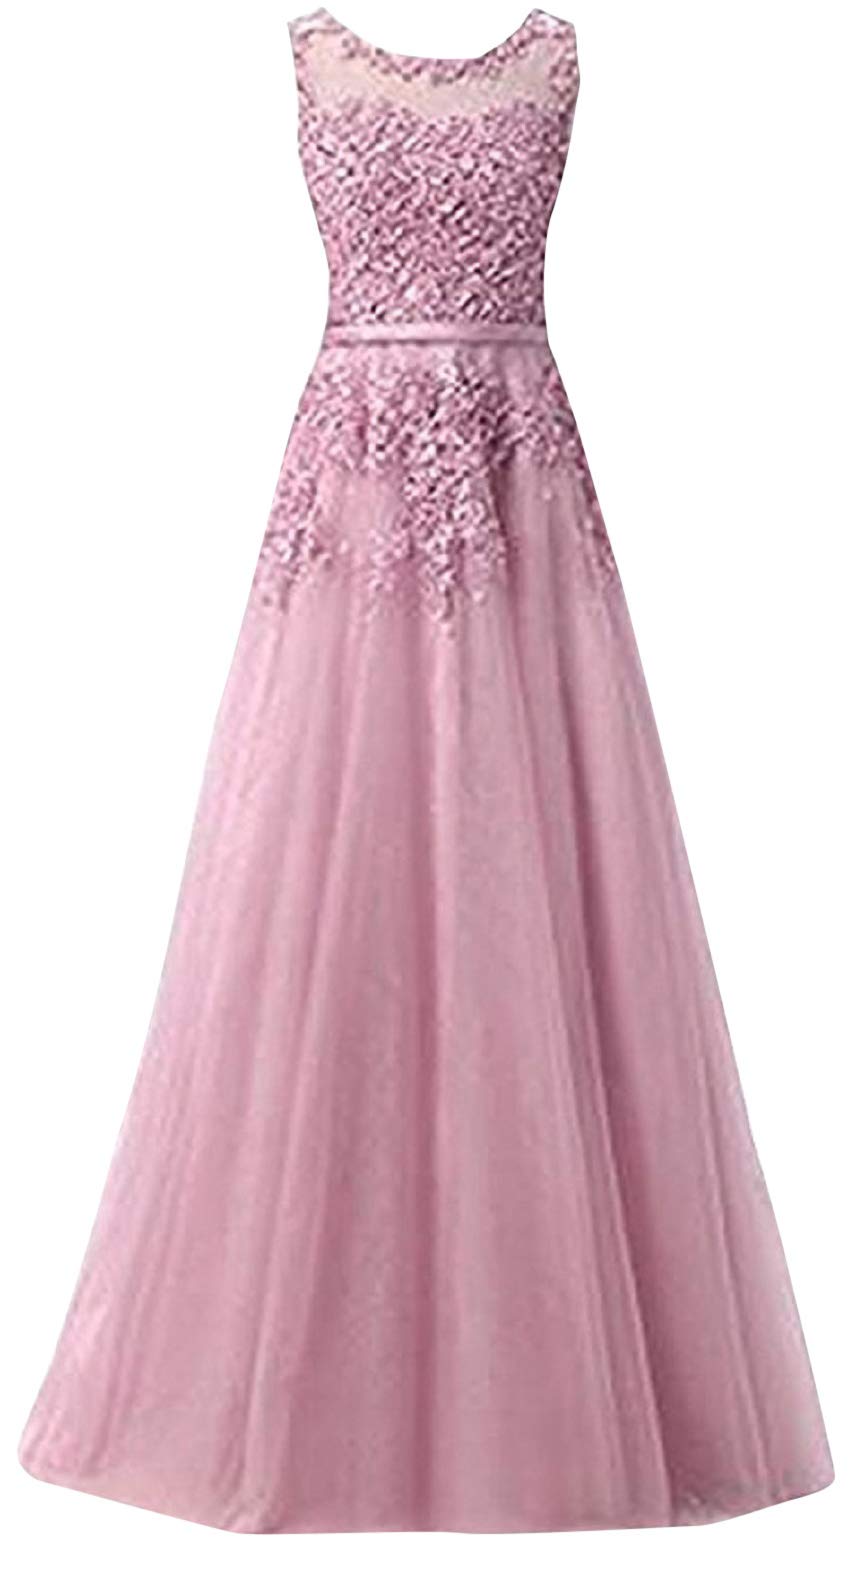 Romantic-Fashion Damen Ballkleid Abendkleid Brautkleid Lang Modell E010-E015 Blütenapplikationen Tüll DE Altrosa Größe 40